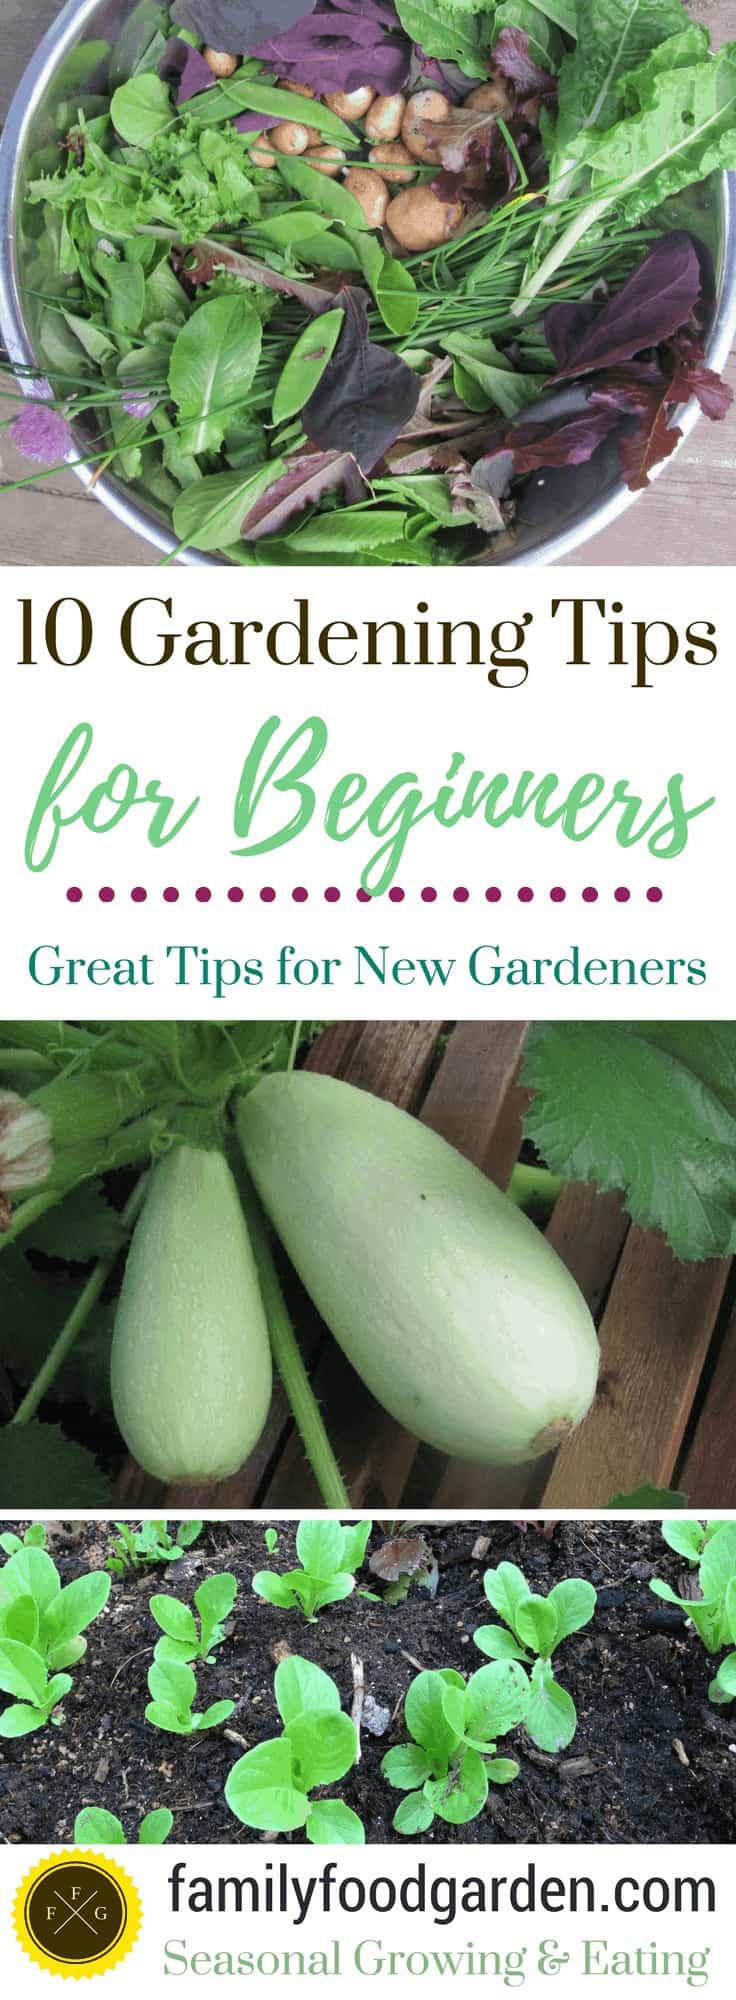 10 Gardening Tips for Beginners: Great Tips for New Gardeners